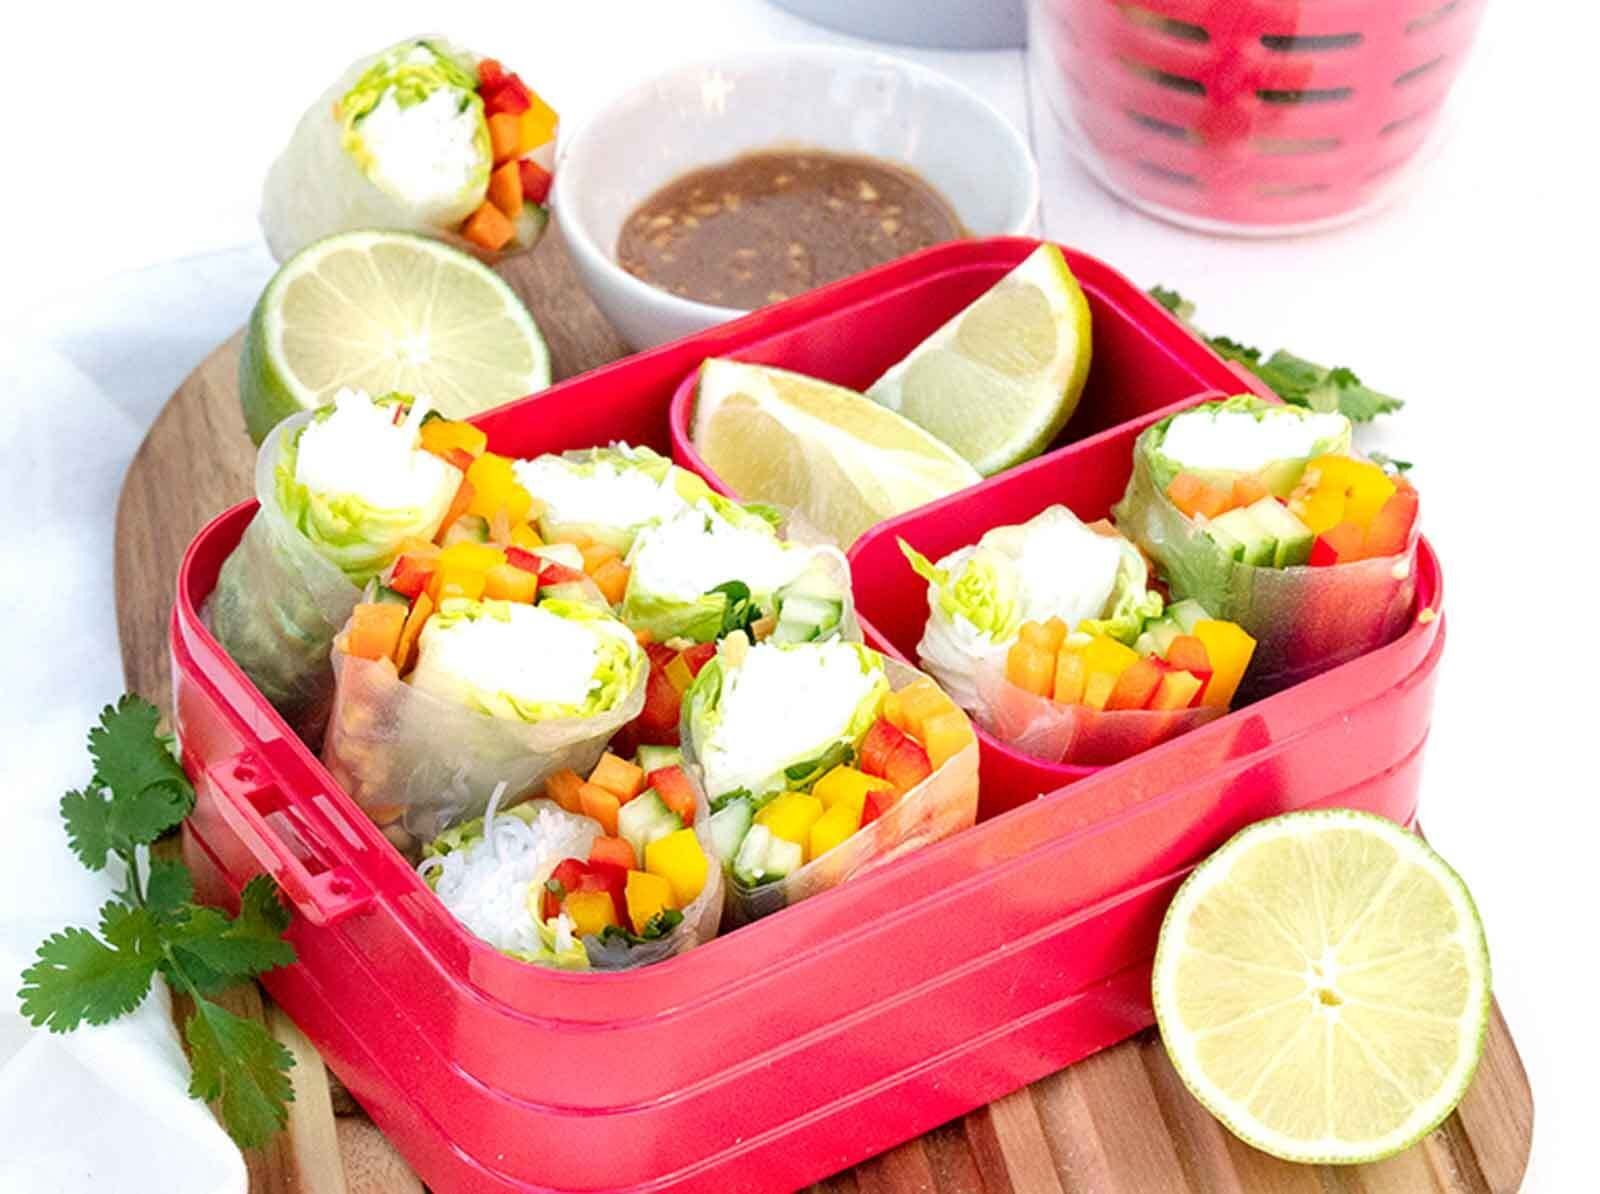 Mepal Lunchbox (2-tlg), Kunststoff, Bento-Brotdose + Nordic + 2er Spülmaschinengeeignet Green Ellipse TAB Lunchpot Set